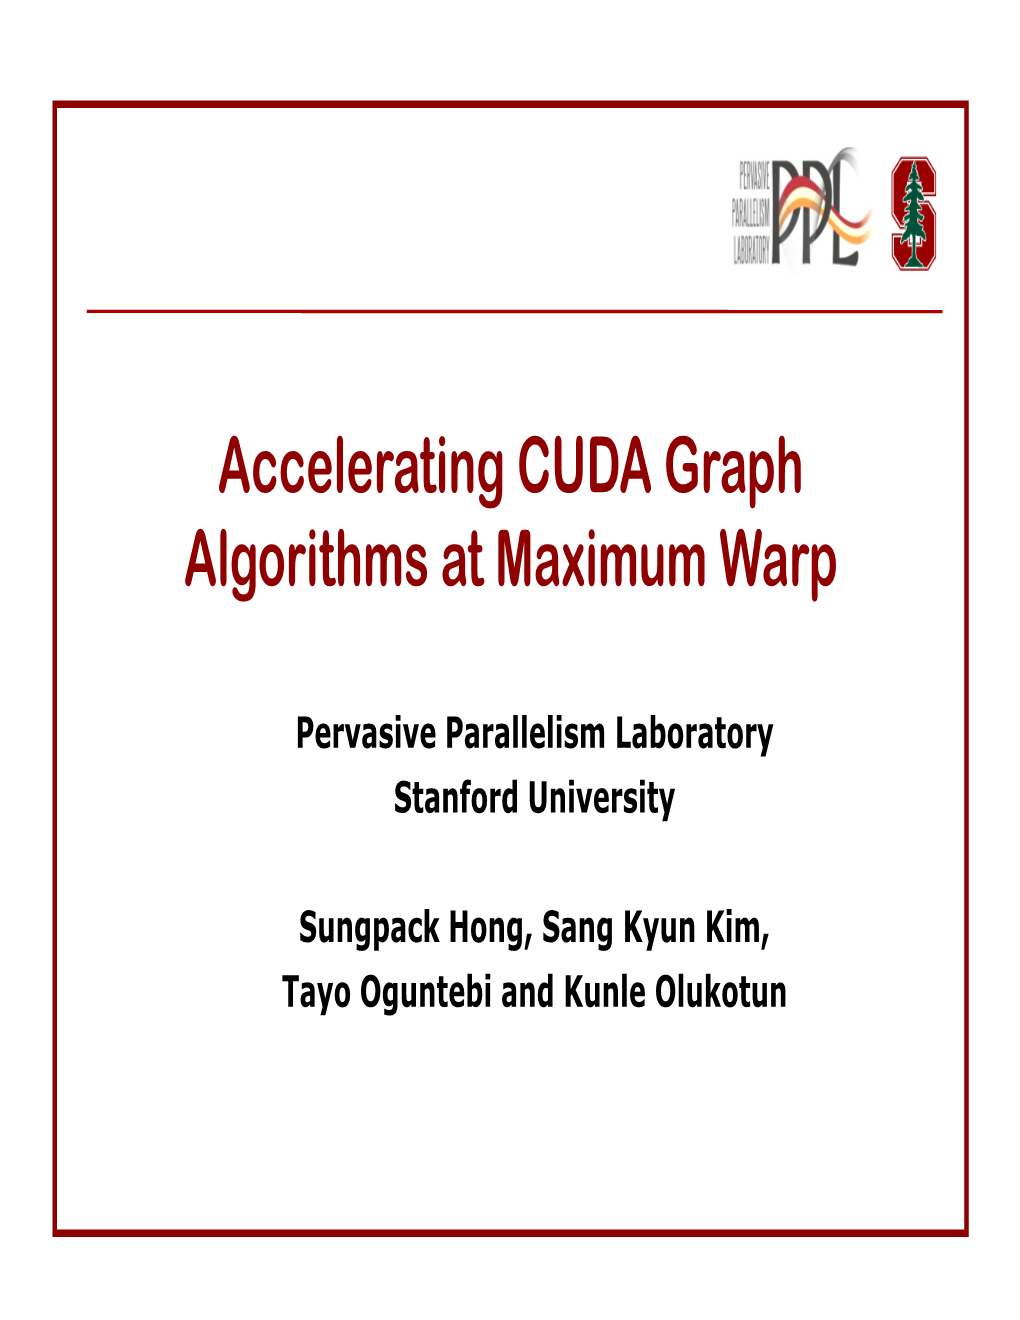 Accelerating CUDA Graph Algorithms at Maximum Warp